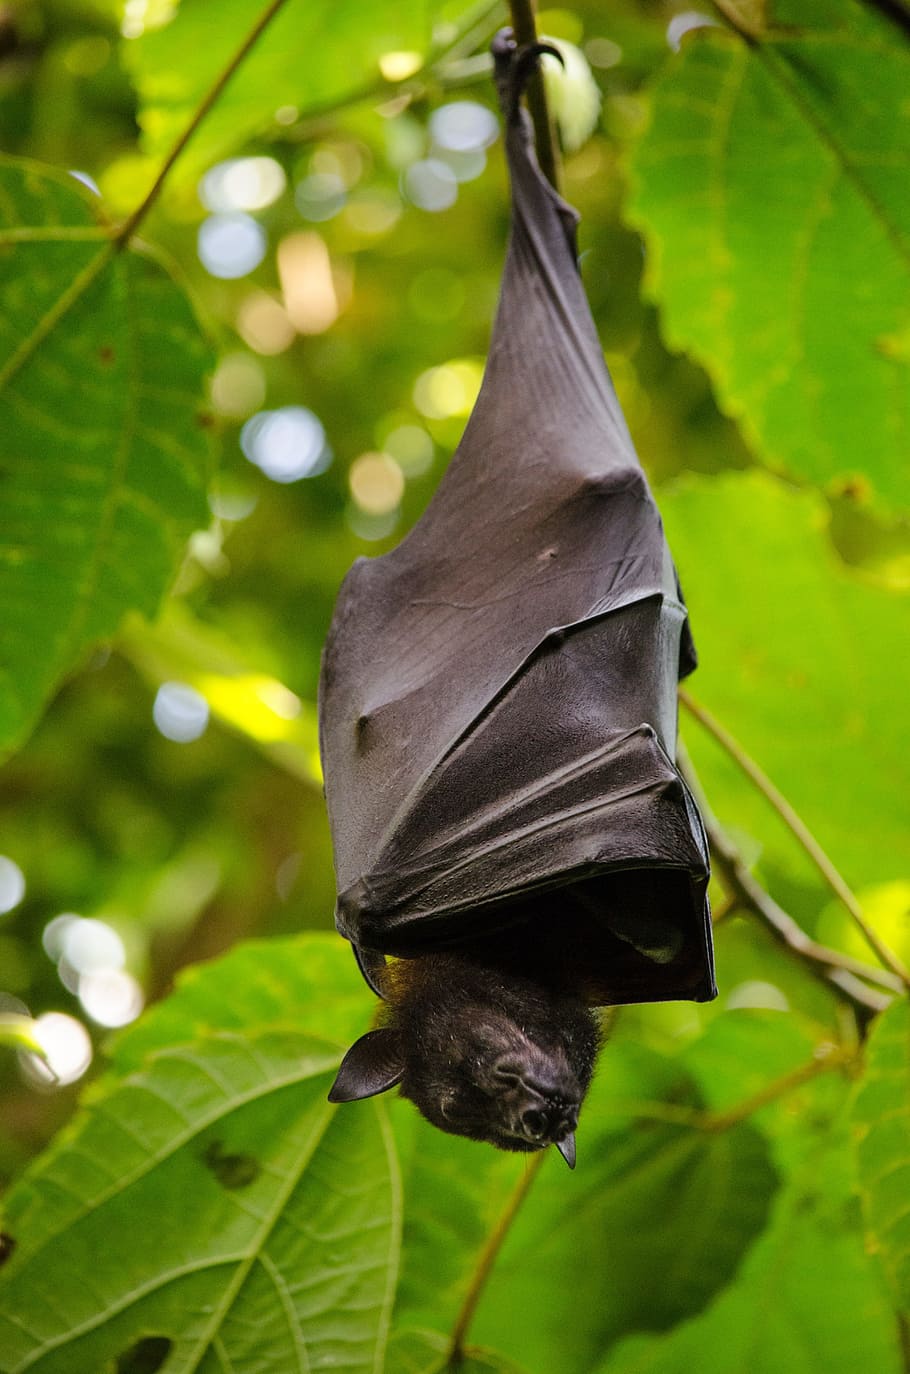 HD wallpaper: black bat sleeping while hanging on leaves, nature, leaf,  animal world | Wallpaper Flare